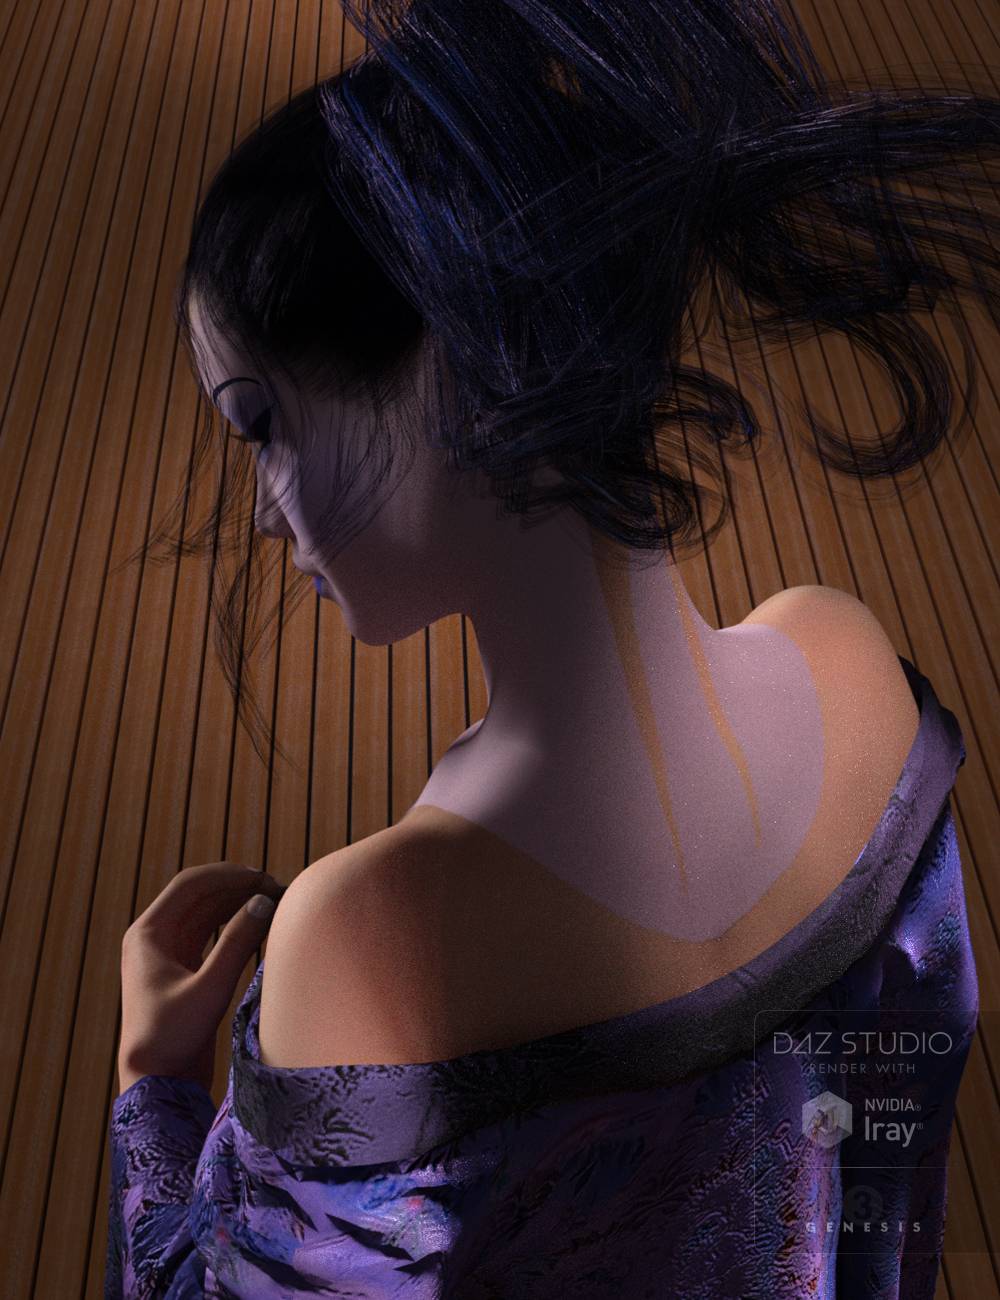 Geisha Builder for Genesis 3 Female(s) by: DraagonStorm, 3D Models by Daz 3D